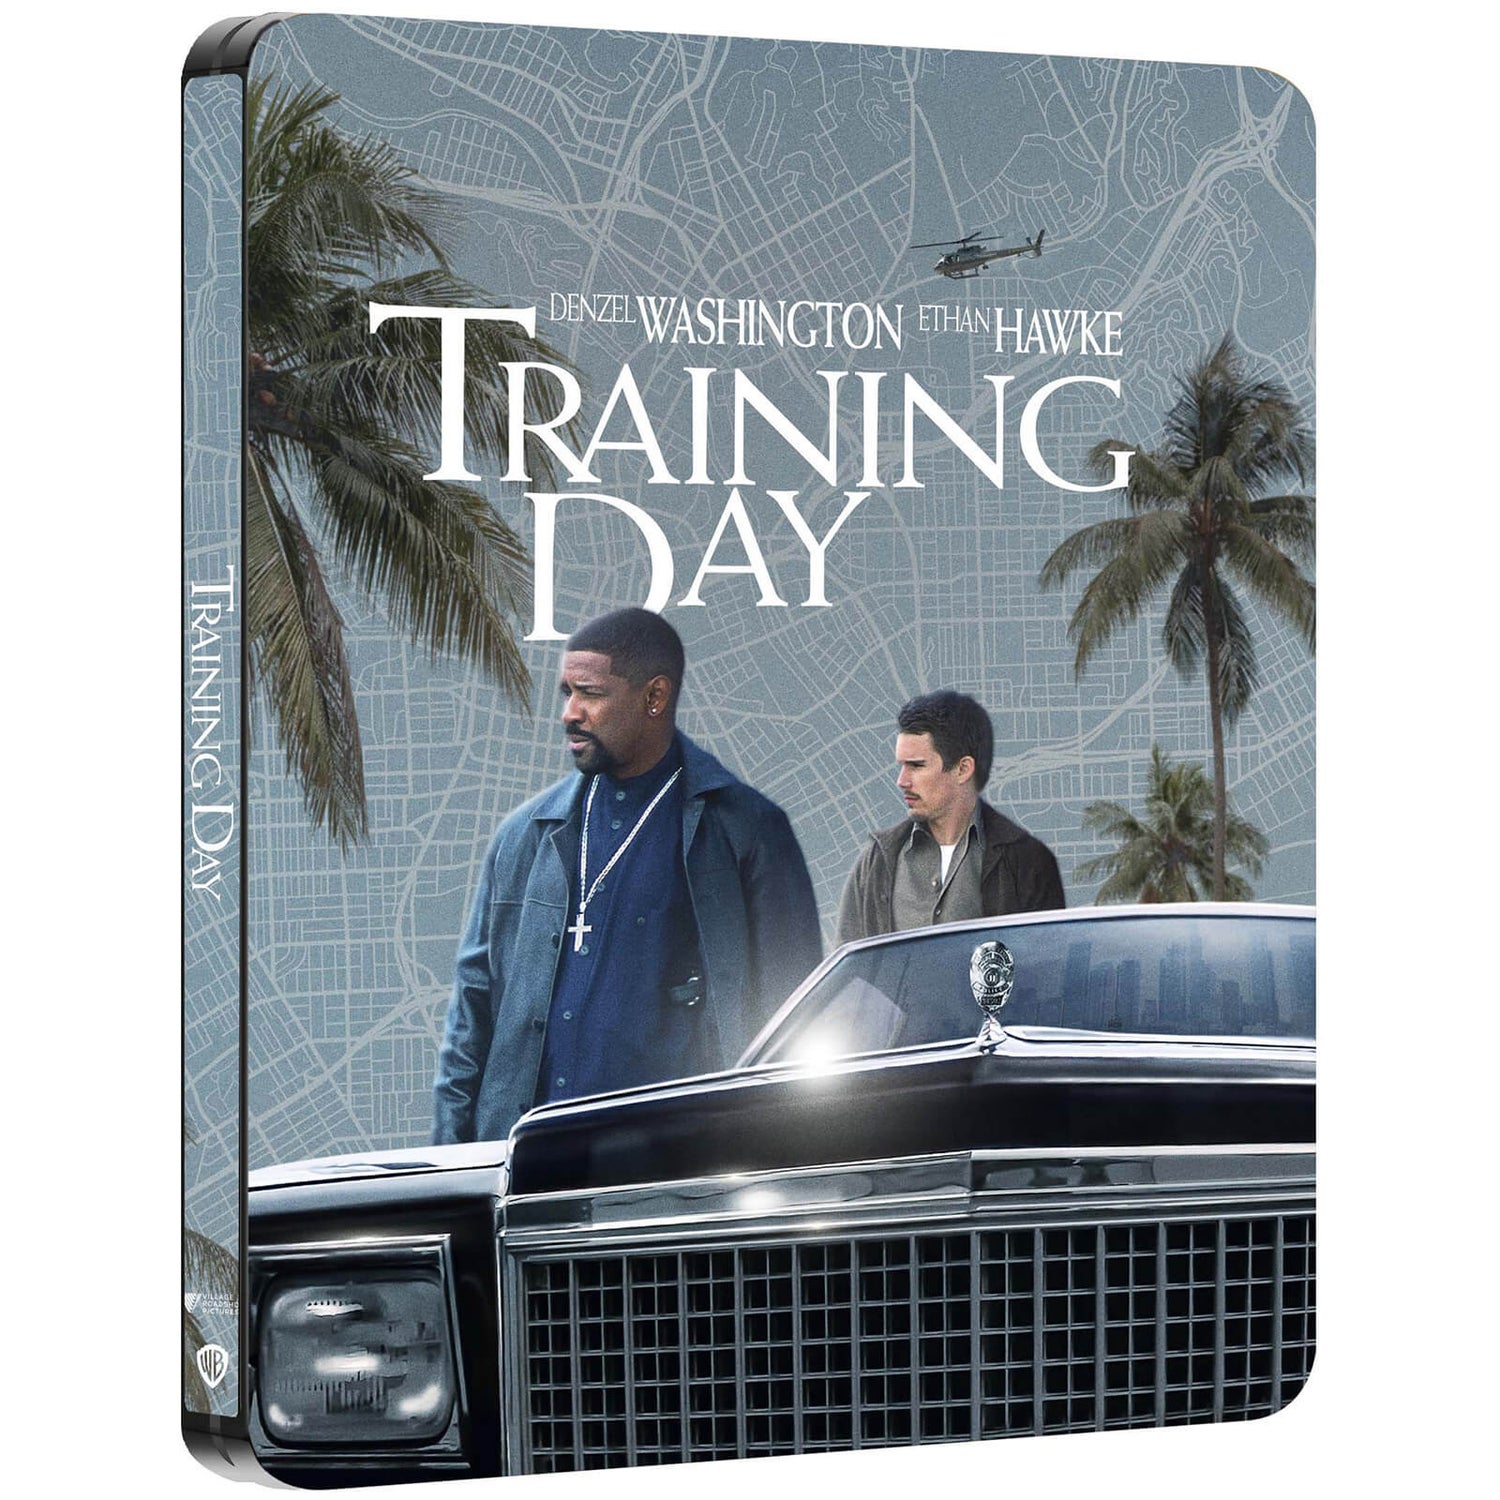 Training Day 4K Ultra HD Steelbook (Includes Blu-ray)